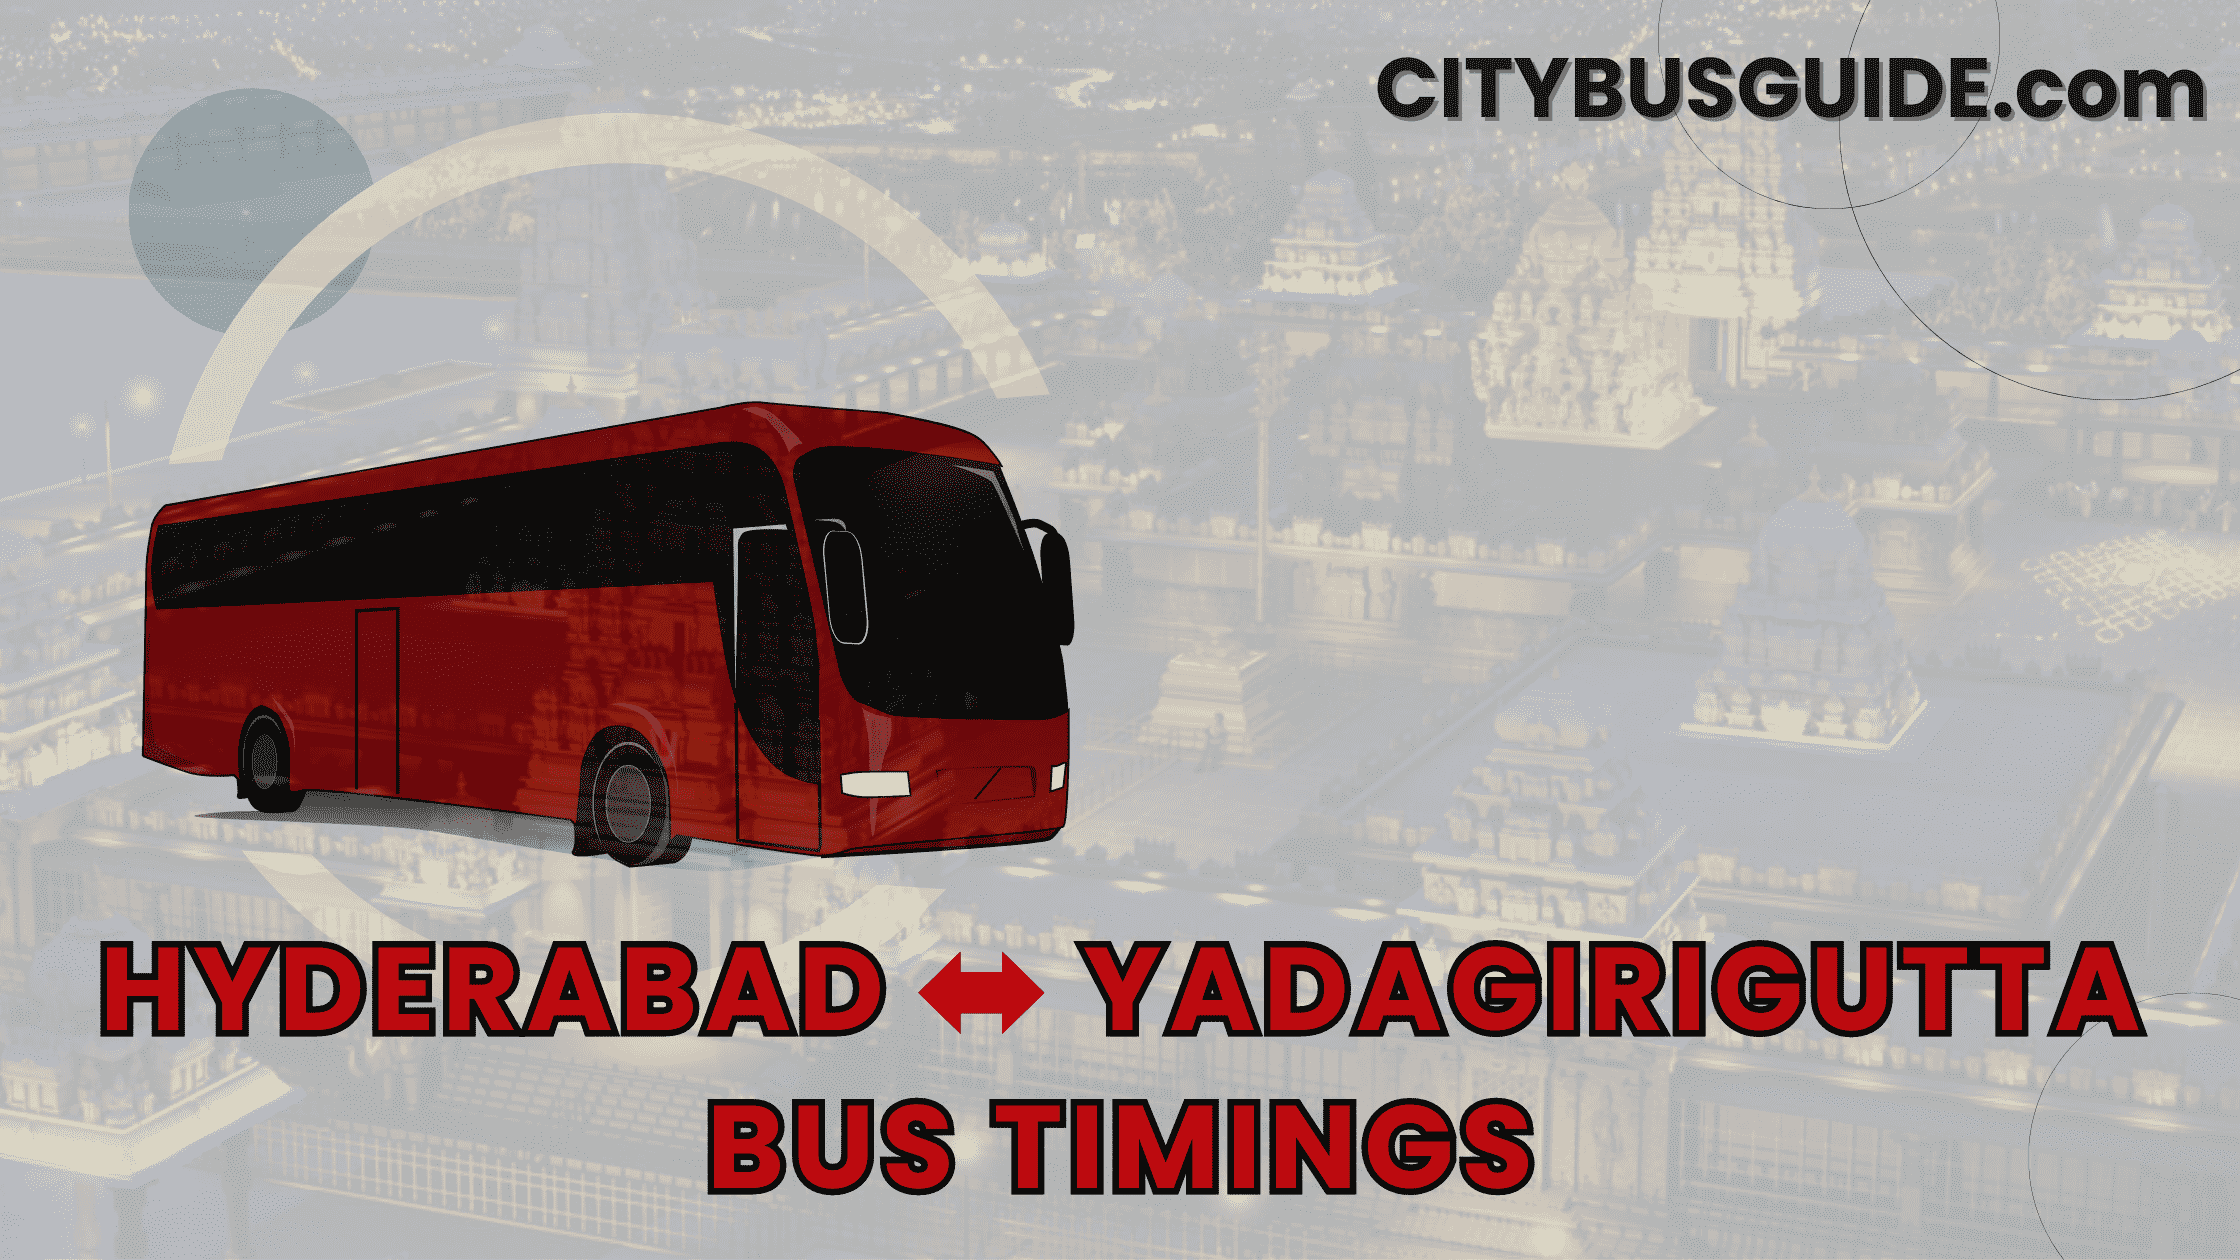 Hyderabad to Yadagirigutta Bus Timings, Distance & Ticket Price